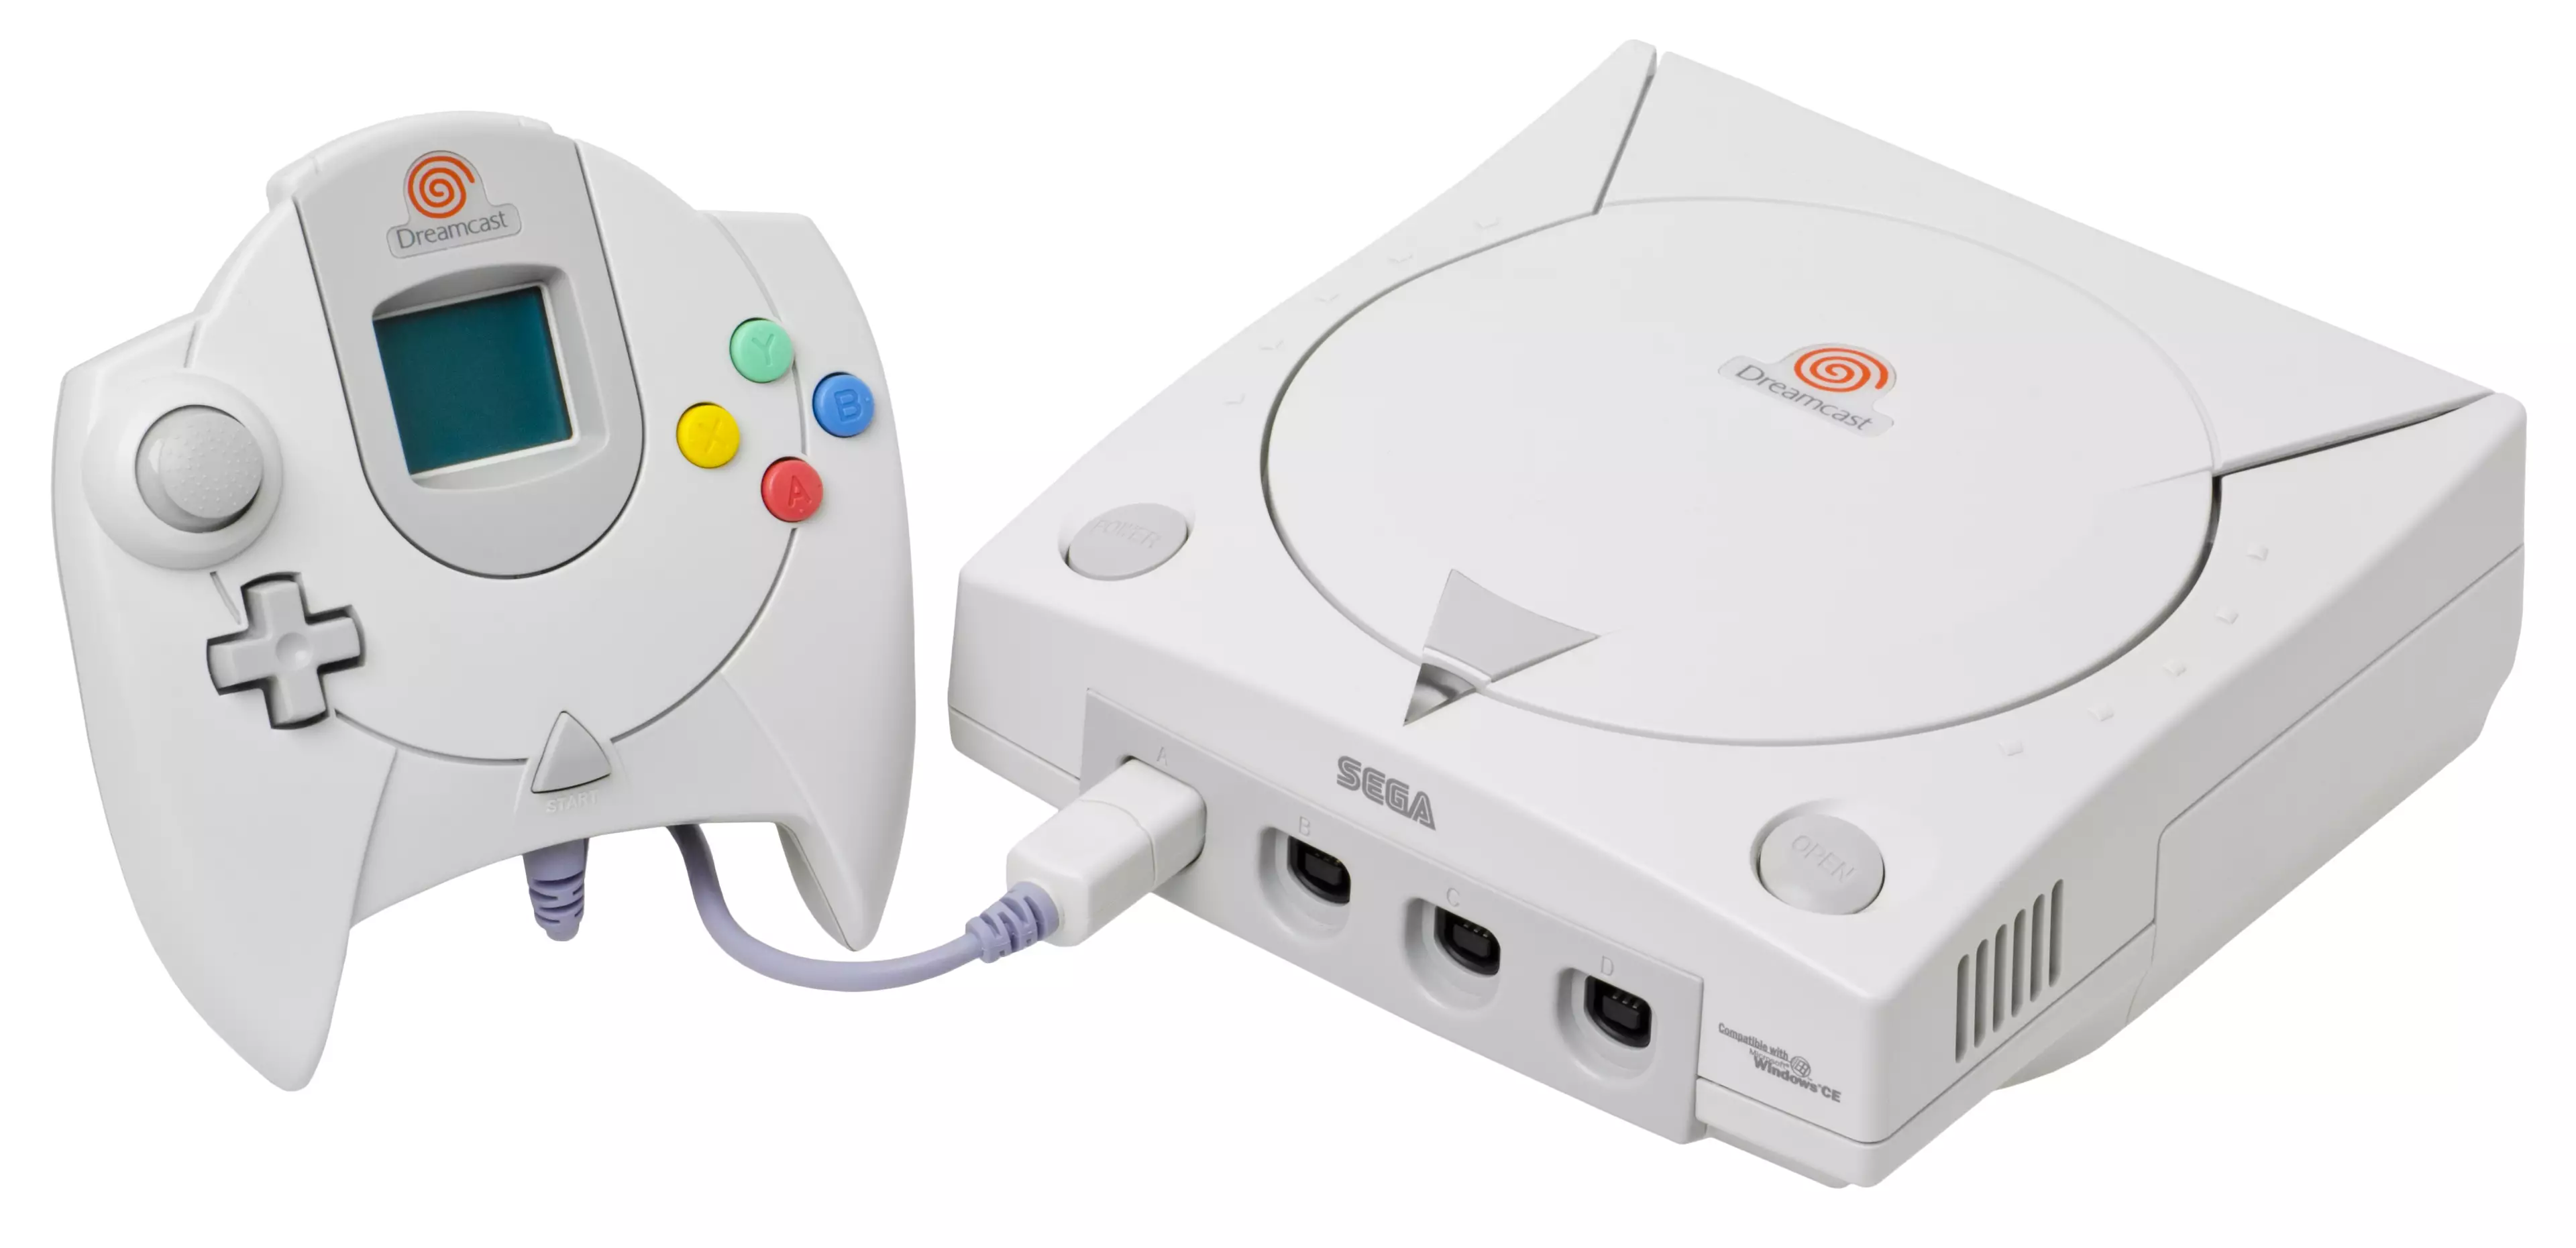 The SEGA Dreamcast /